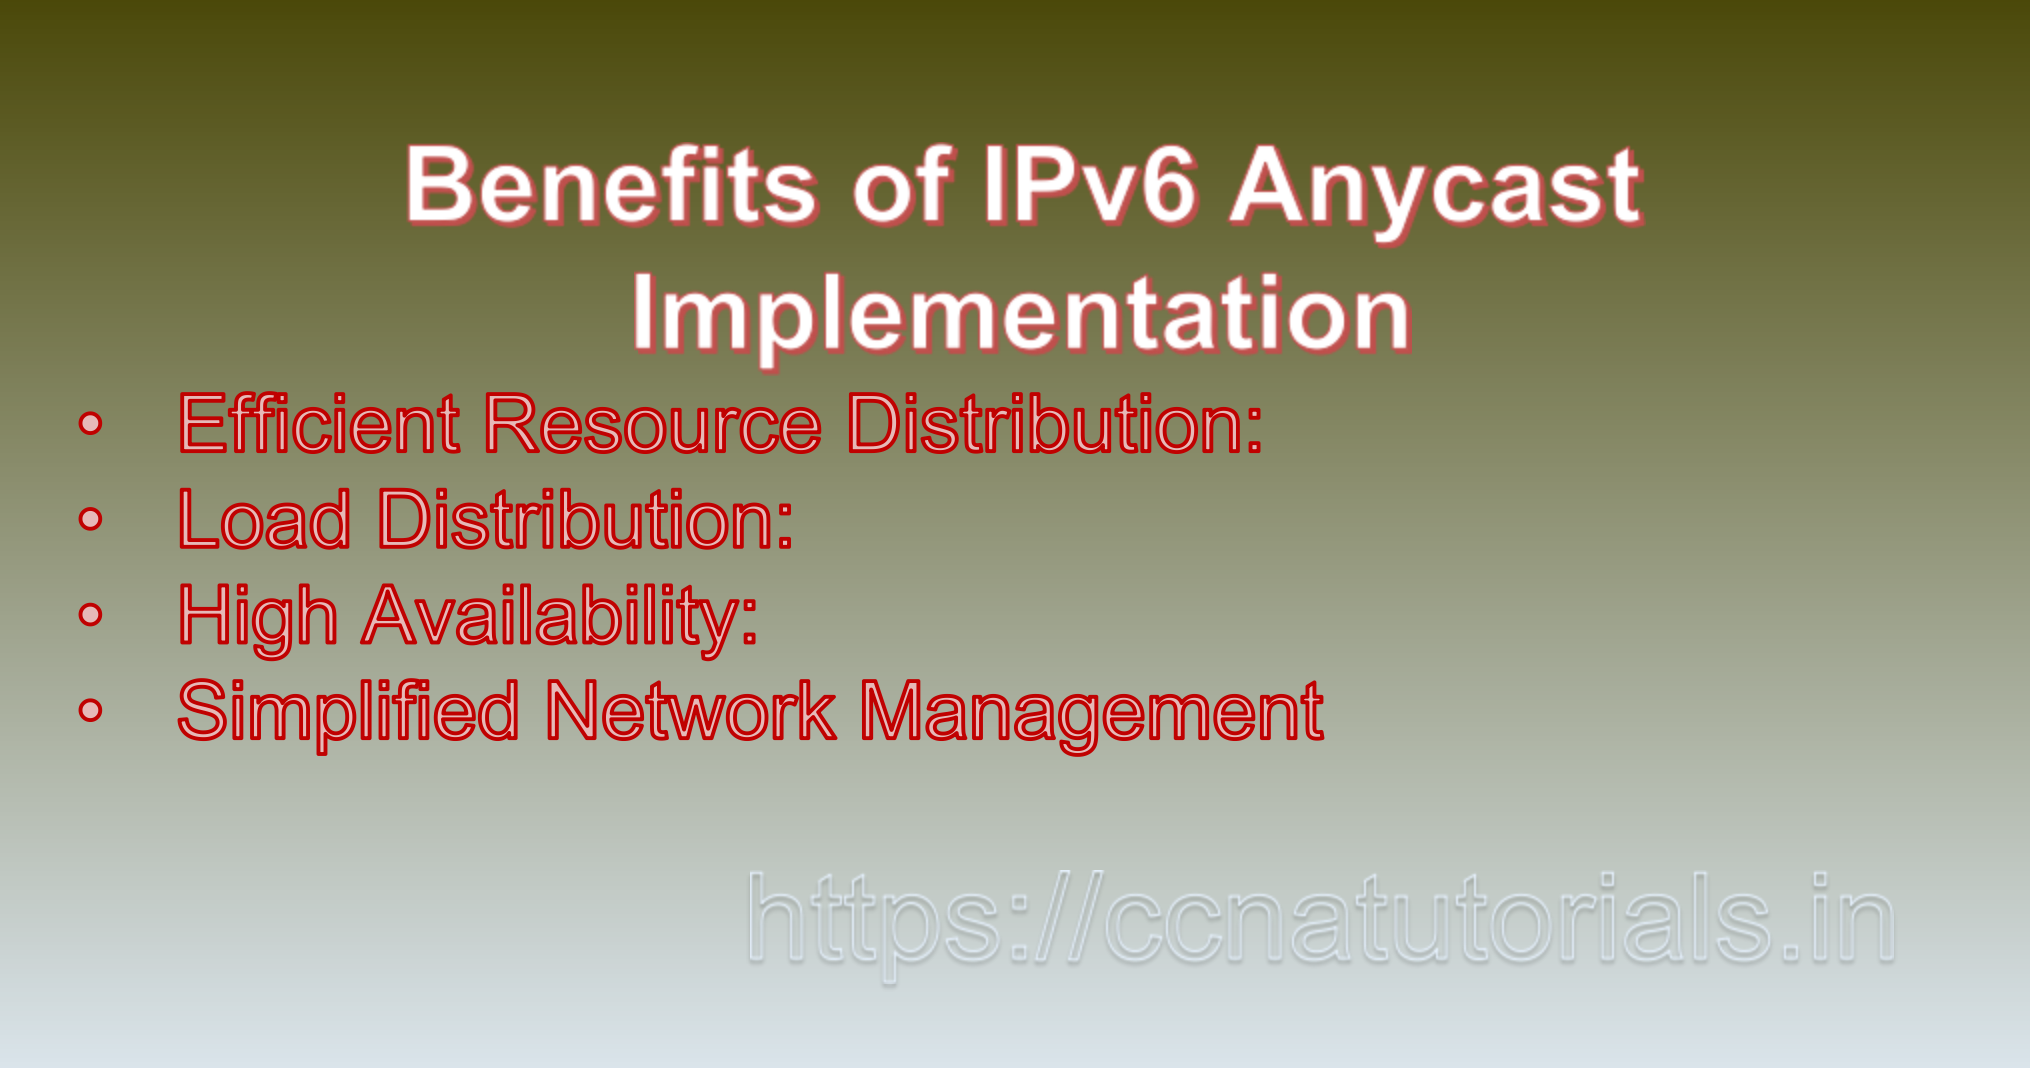 IPv6 Anycast Implementation, ccna, ccna tutorials